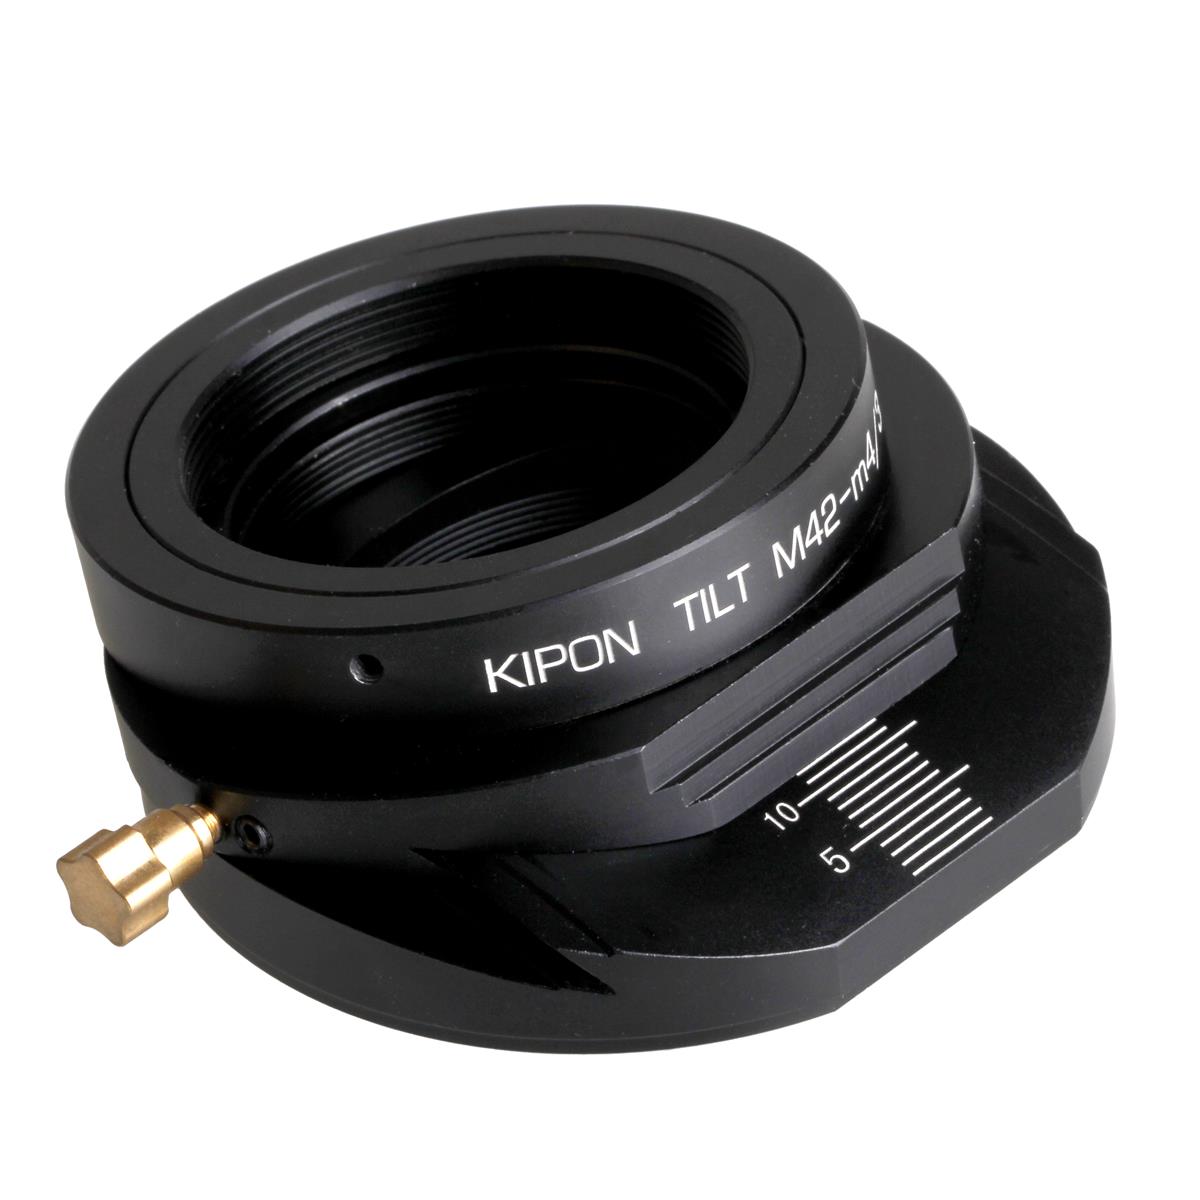 

Kipon Tilt-Shift Lens Mount Adapter from Pentax Screw M42 to M4/3 Body